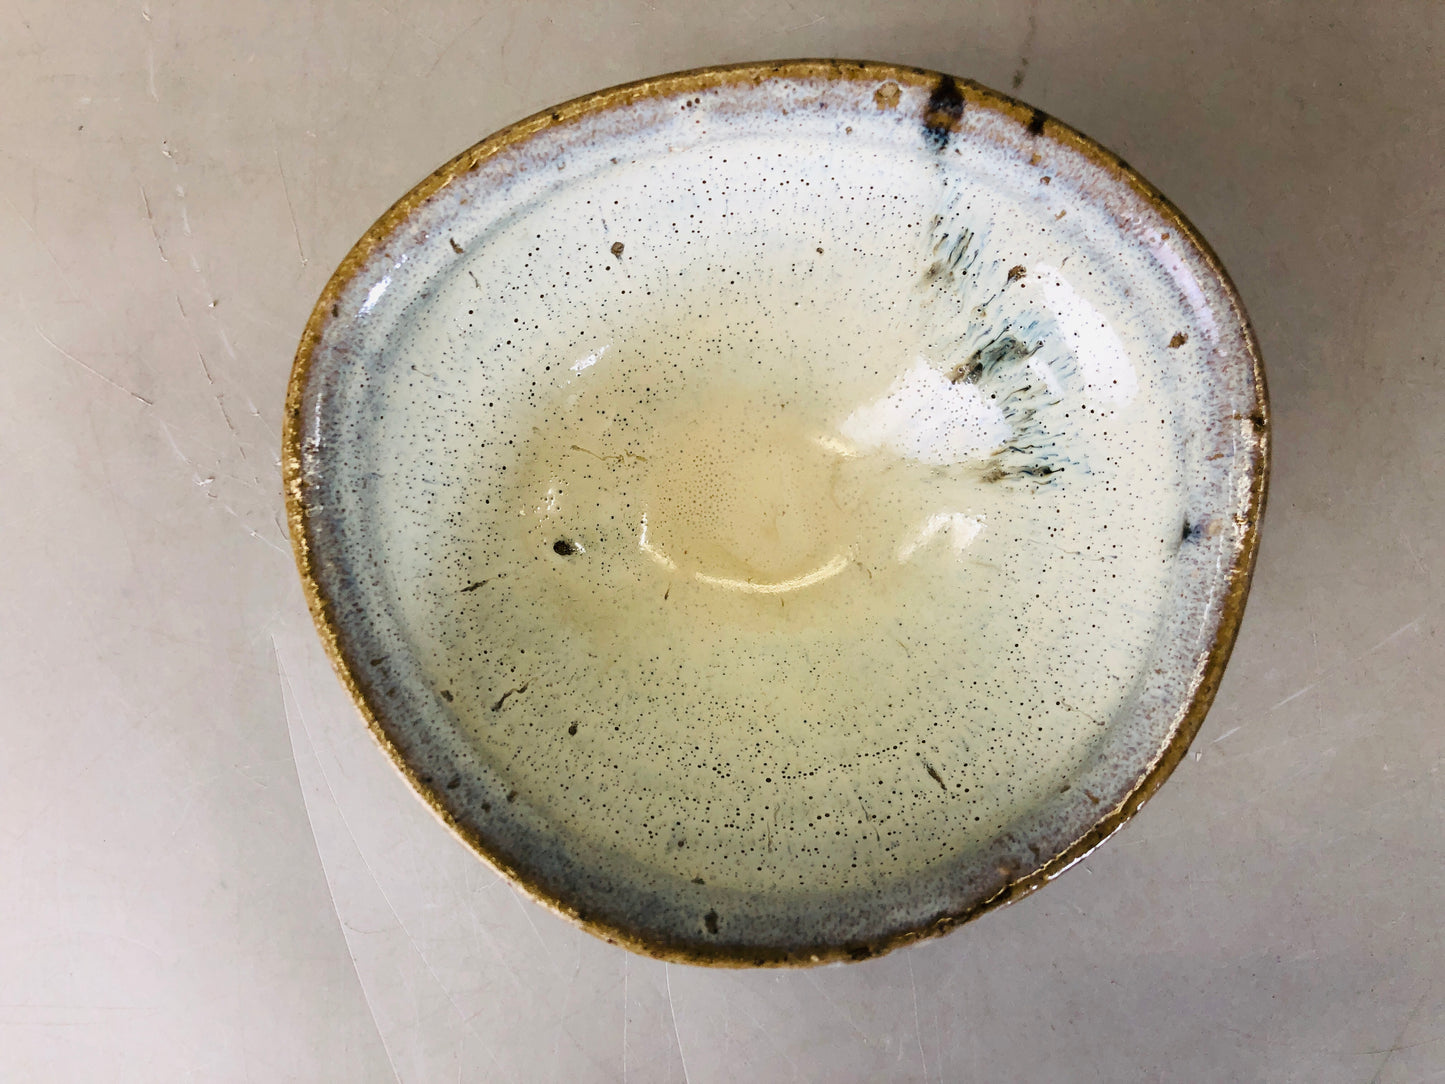 Y6288 「VIDEO] CHAWAN Karatsu-ware signed box Japan antique tea ceremony pottery bowl